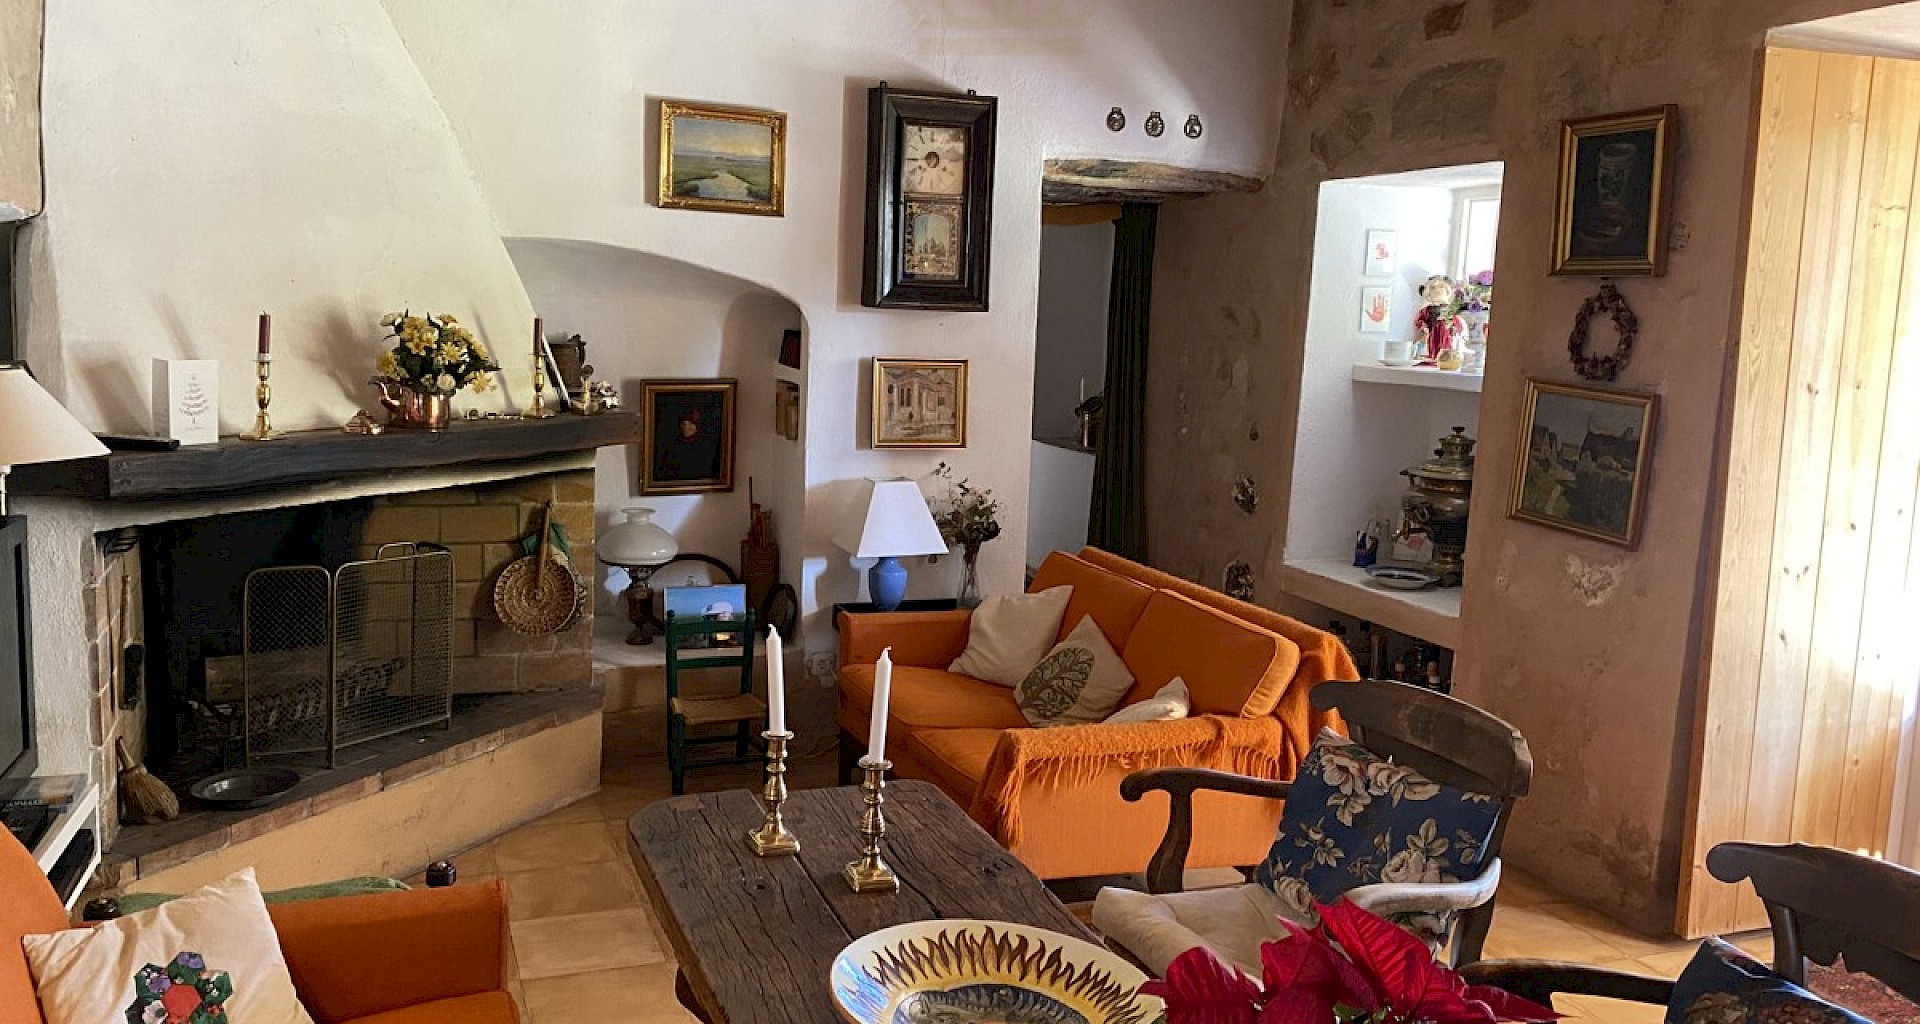 KROHN & LUEDEMANN Mediterranean Mallorca Finca/ country house in sought-after Andratx location Finca Andratx 04